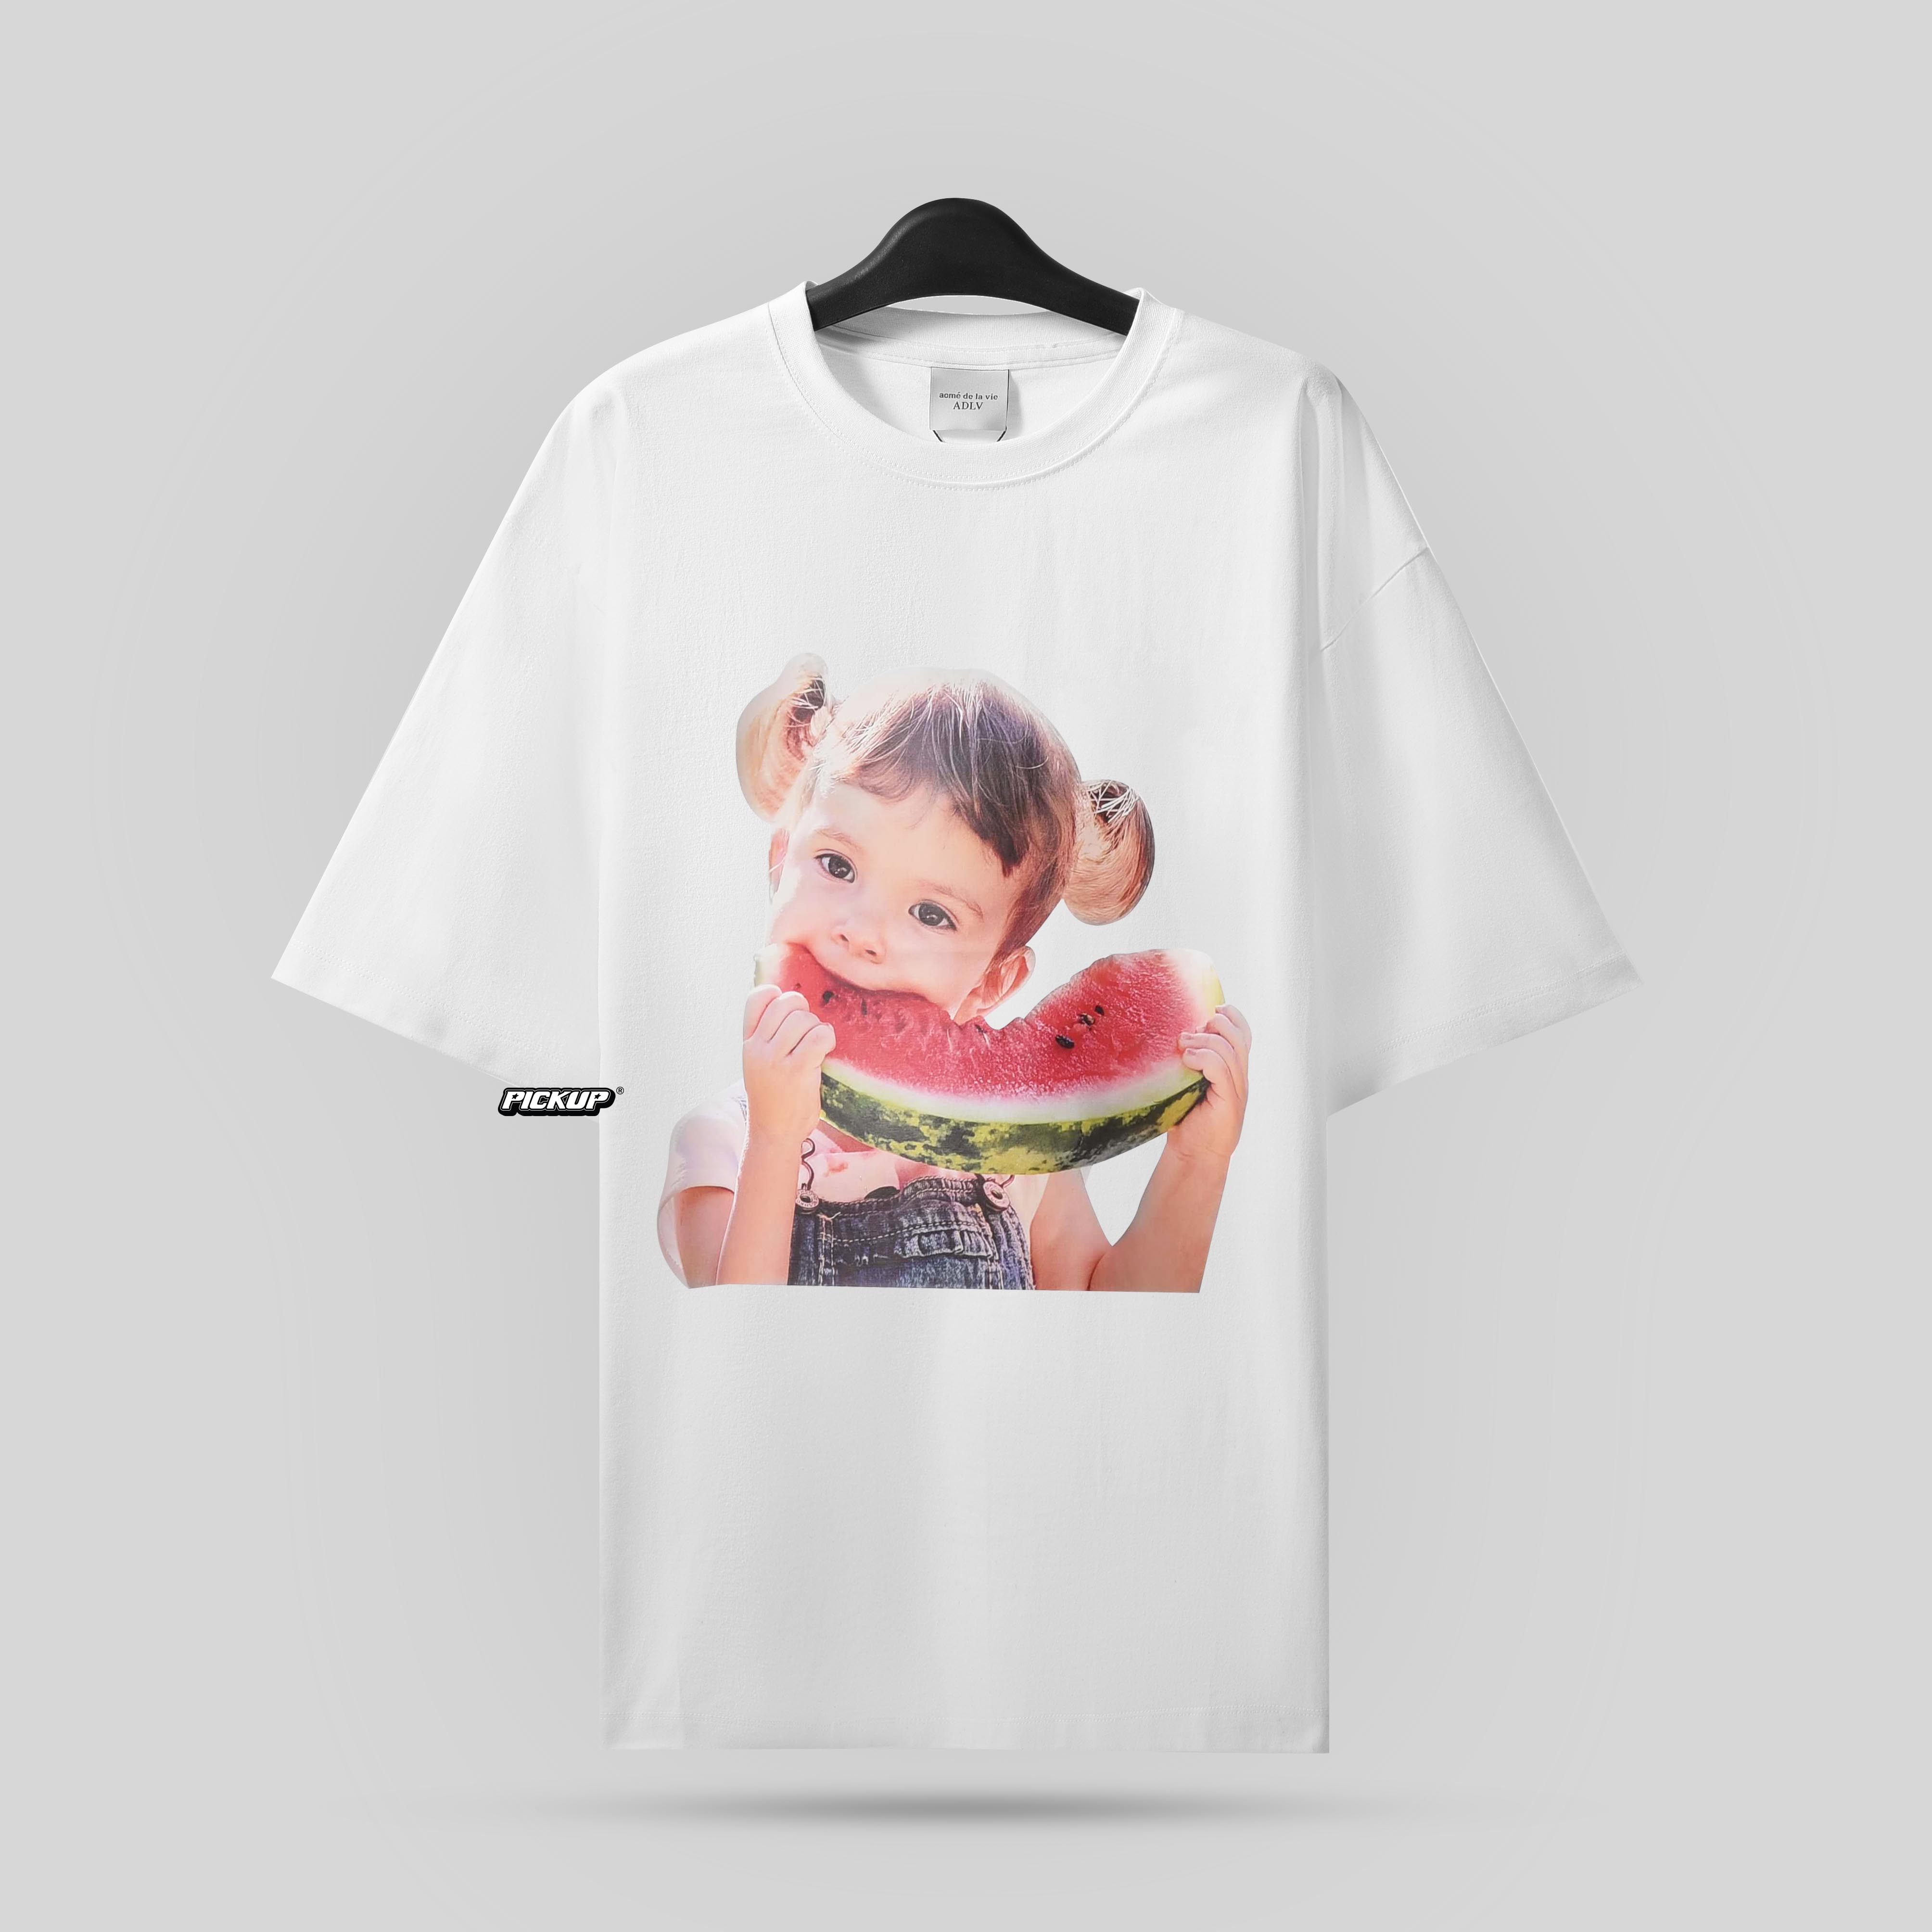 ADLV Baby Face Short Sleeve Watermelon Tshirt - White